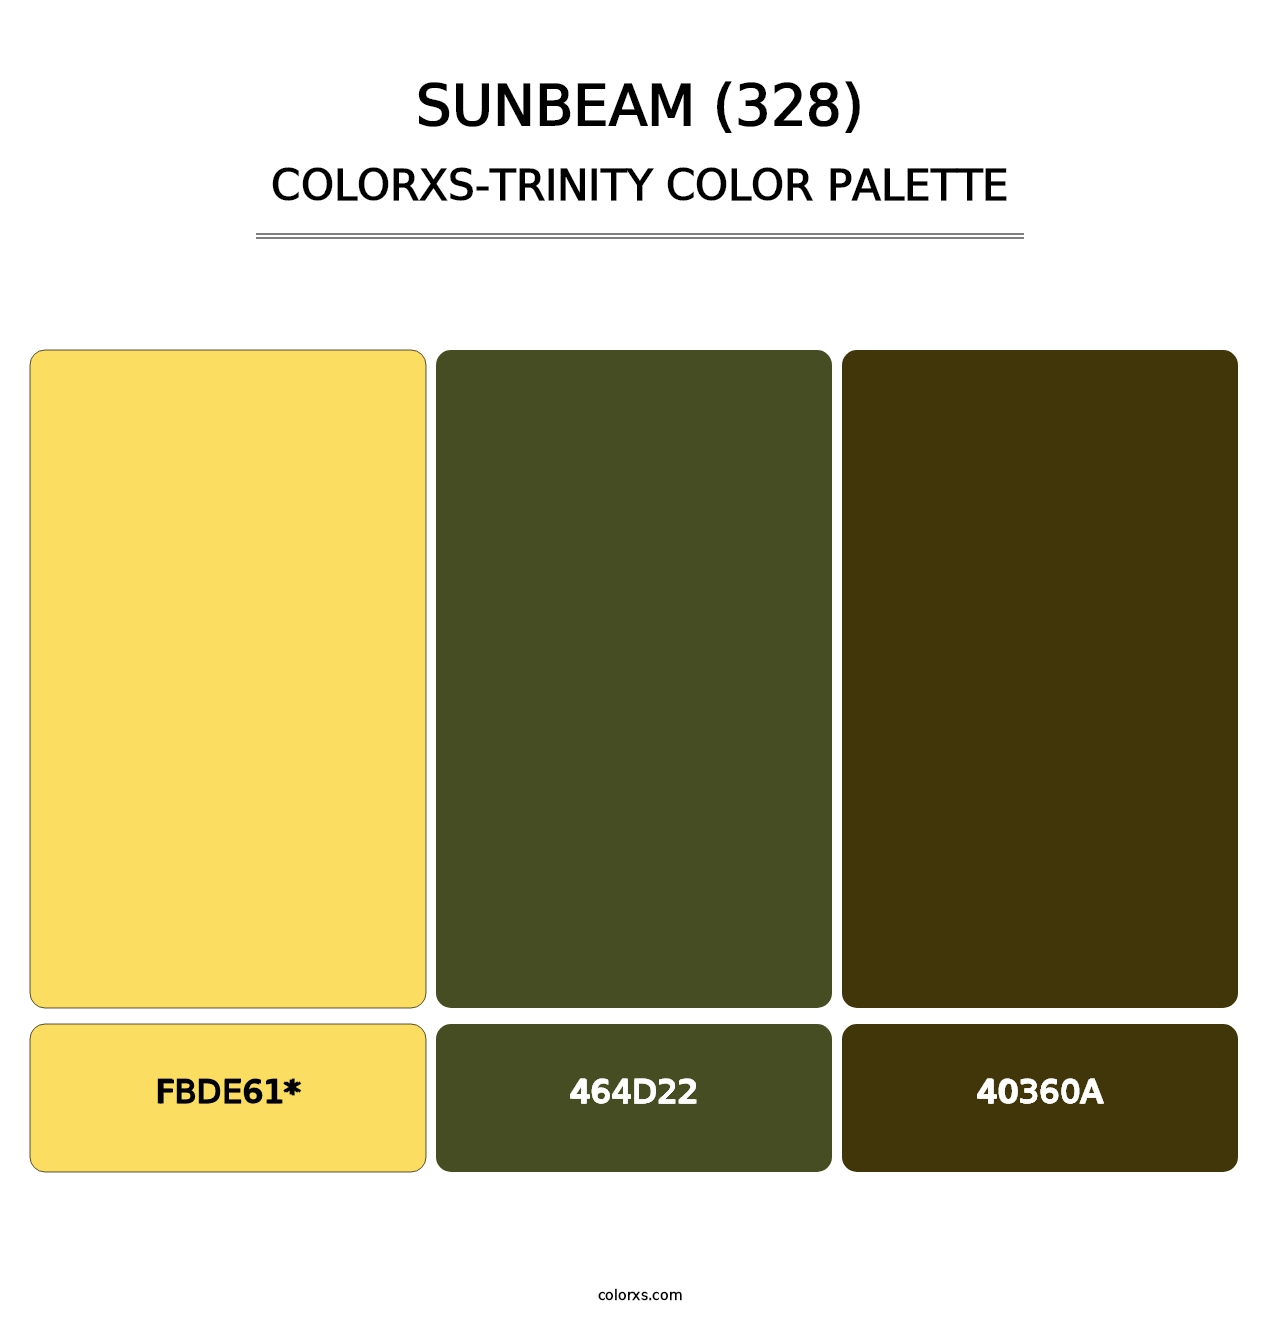 Sunbeam (328) - Colorxs Trinity Palette